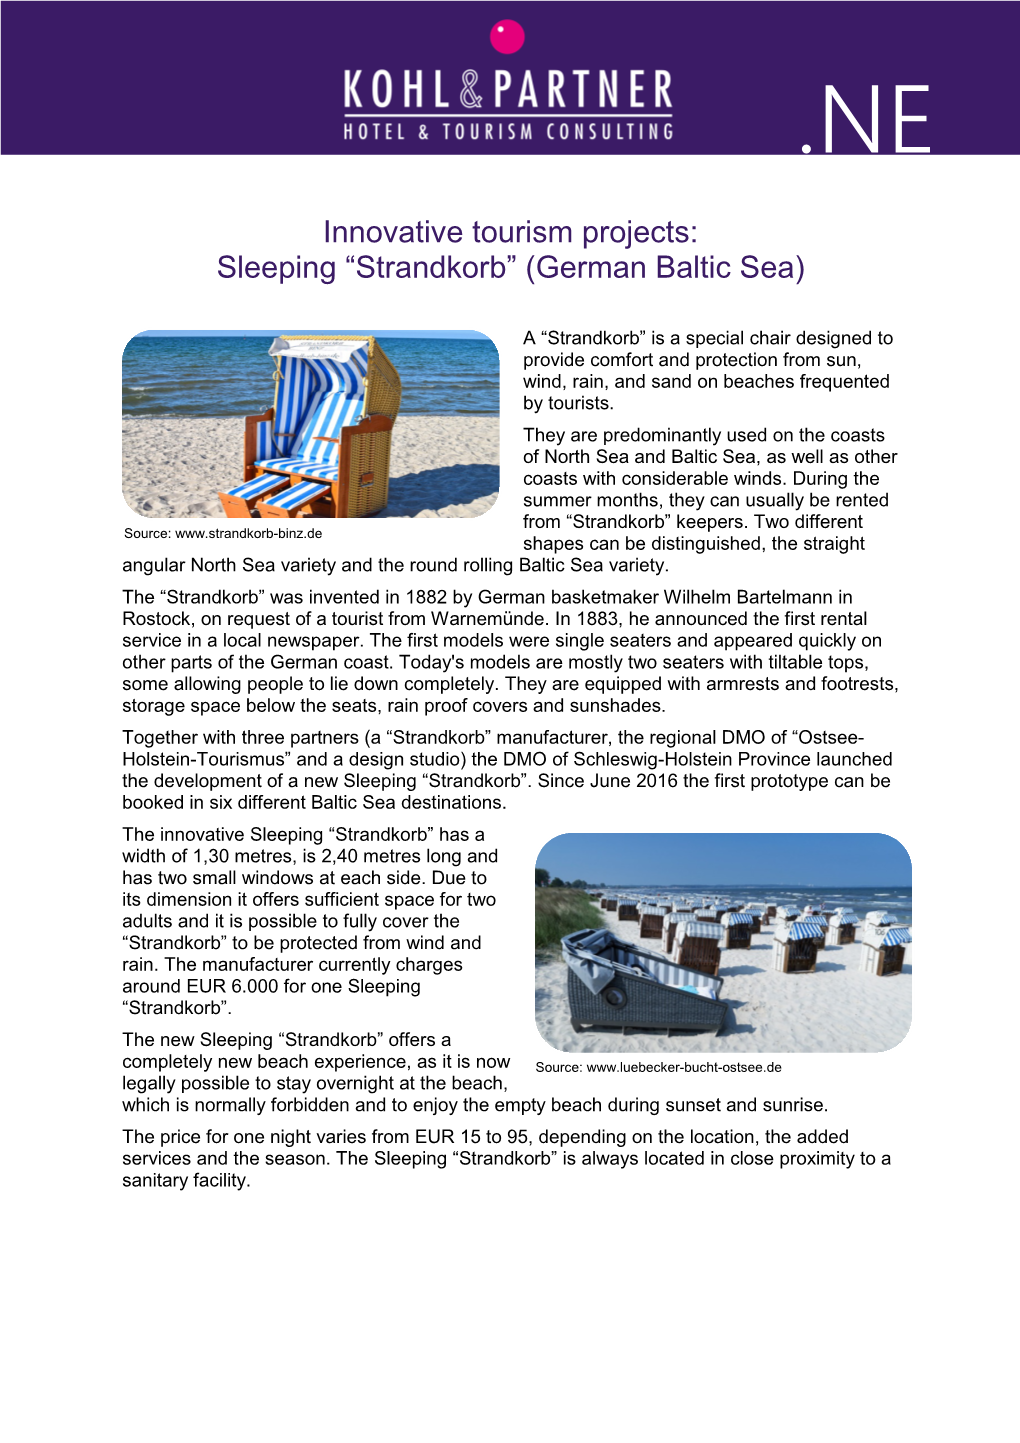 Sleeping “Strandkorb” (German Baltic Sea)